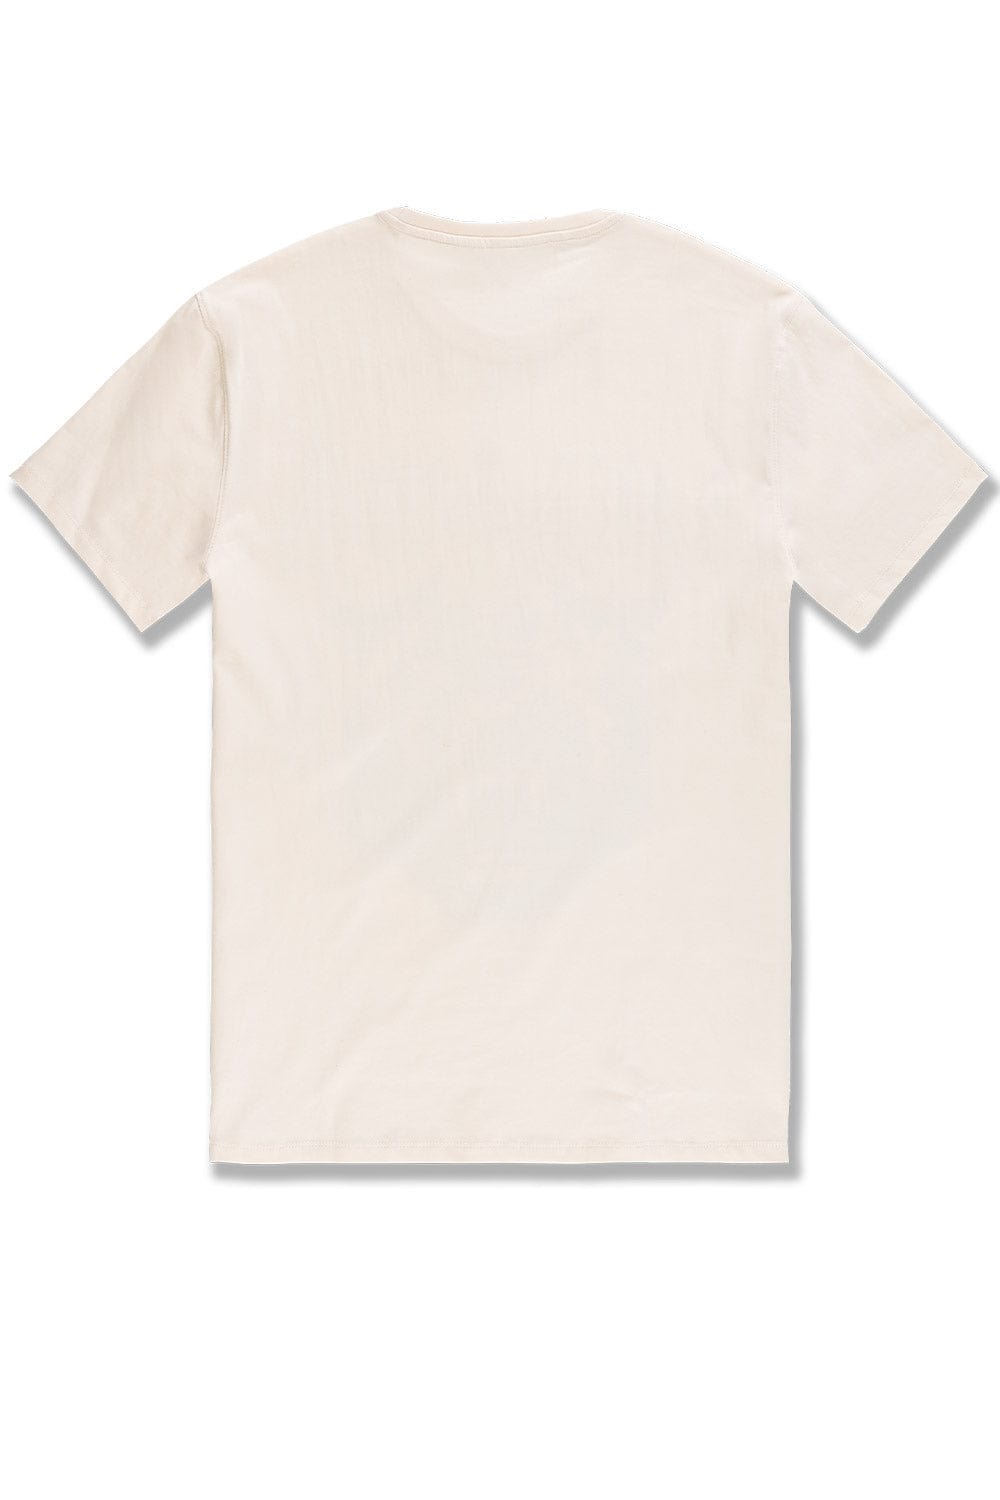 JC Big Men Big Men's Blak Panther T-Shirt (Cream)